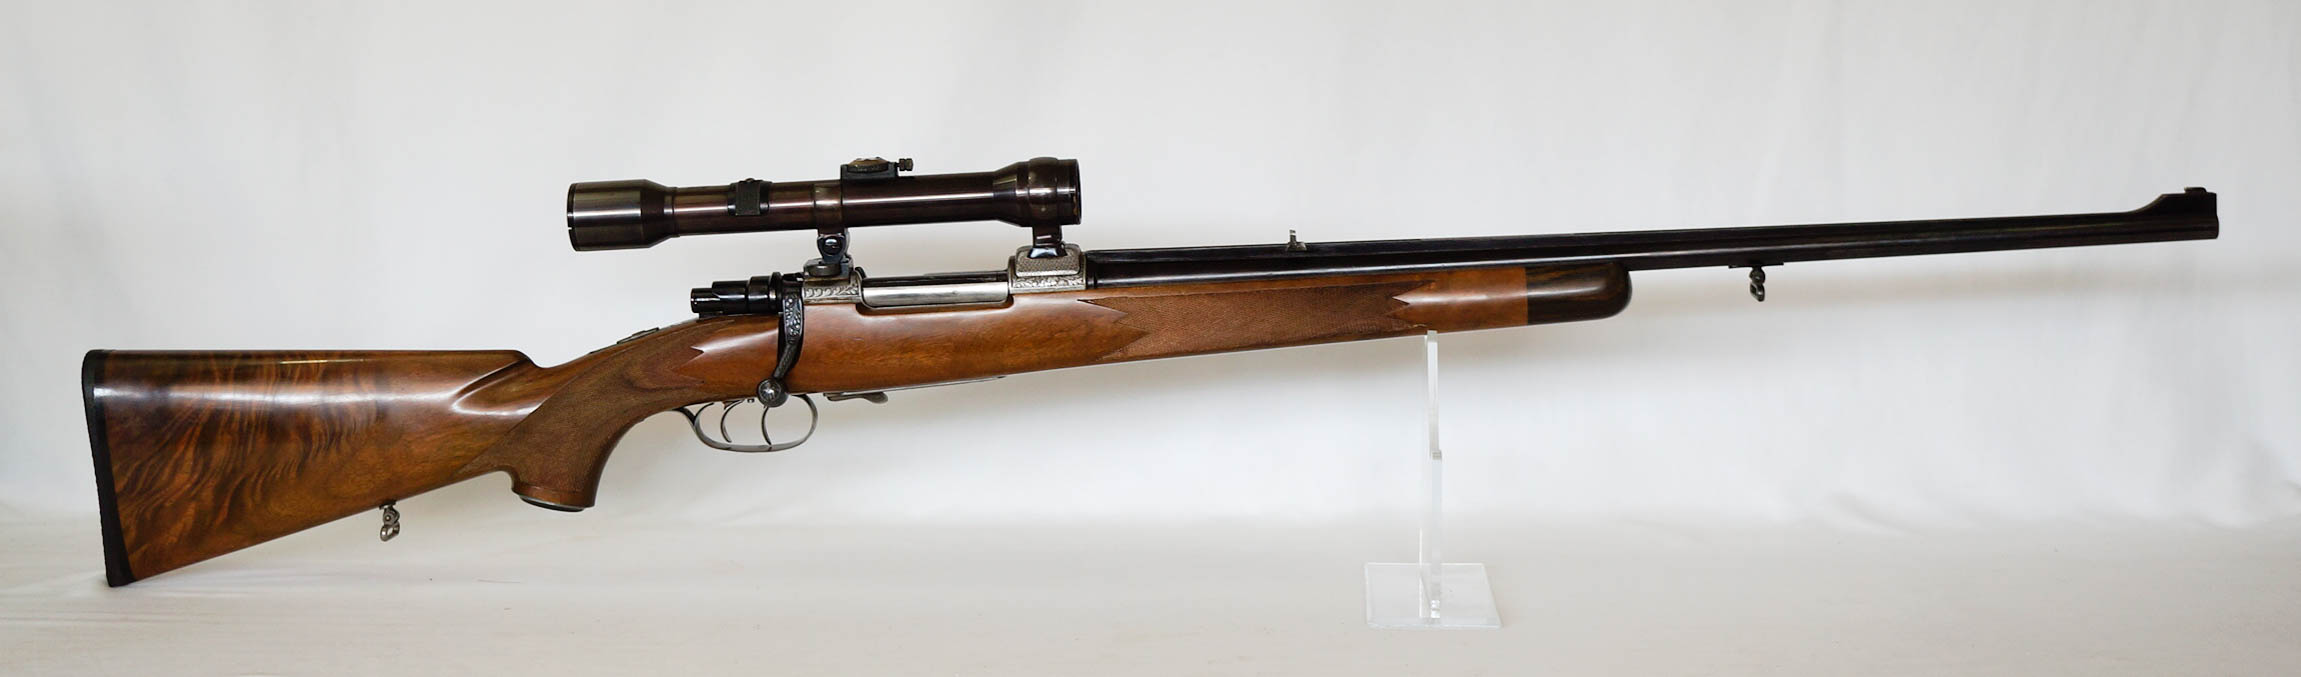 Engraved Dschulnigg Austrian Sporting Rifle